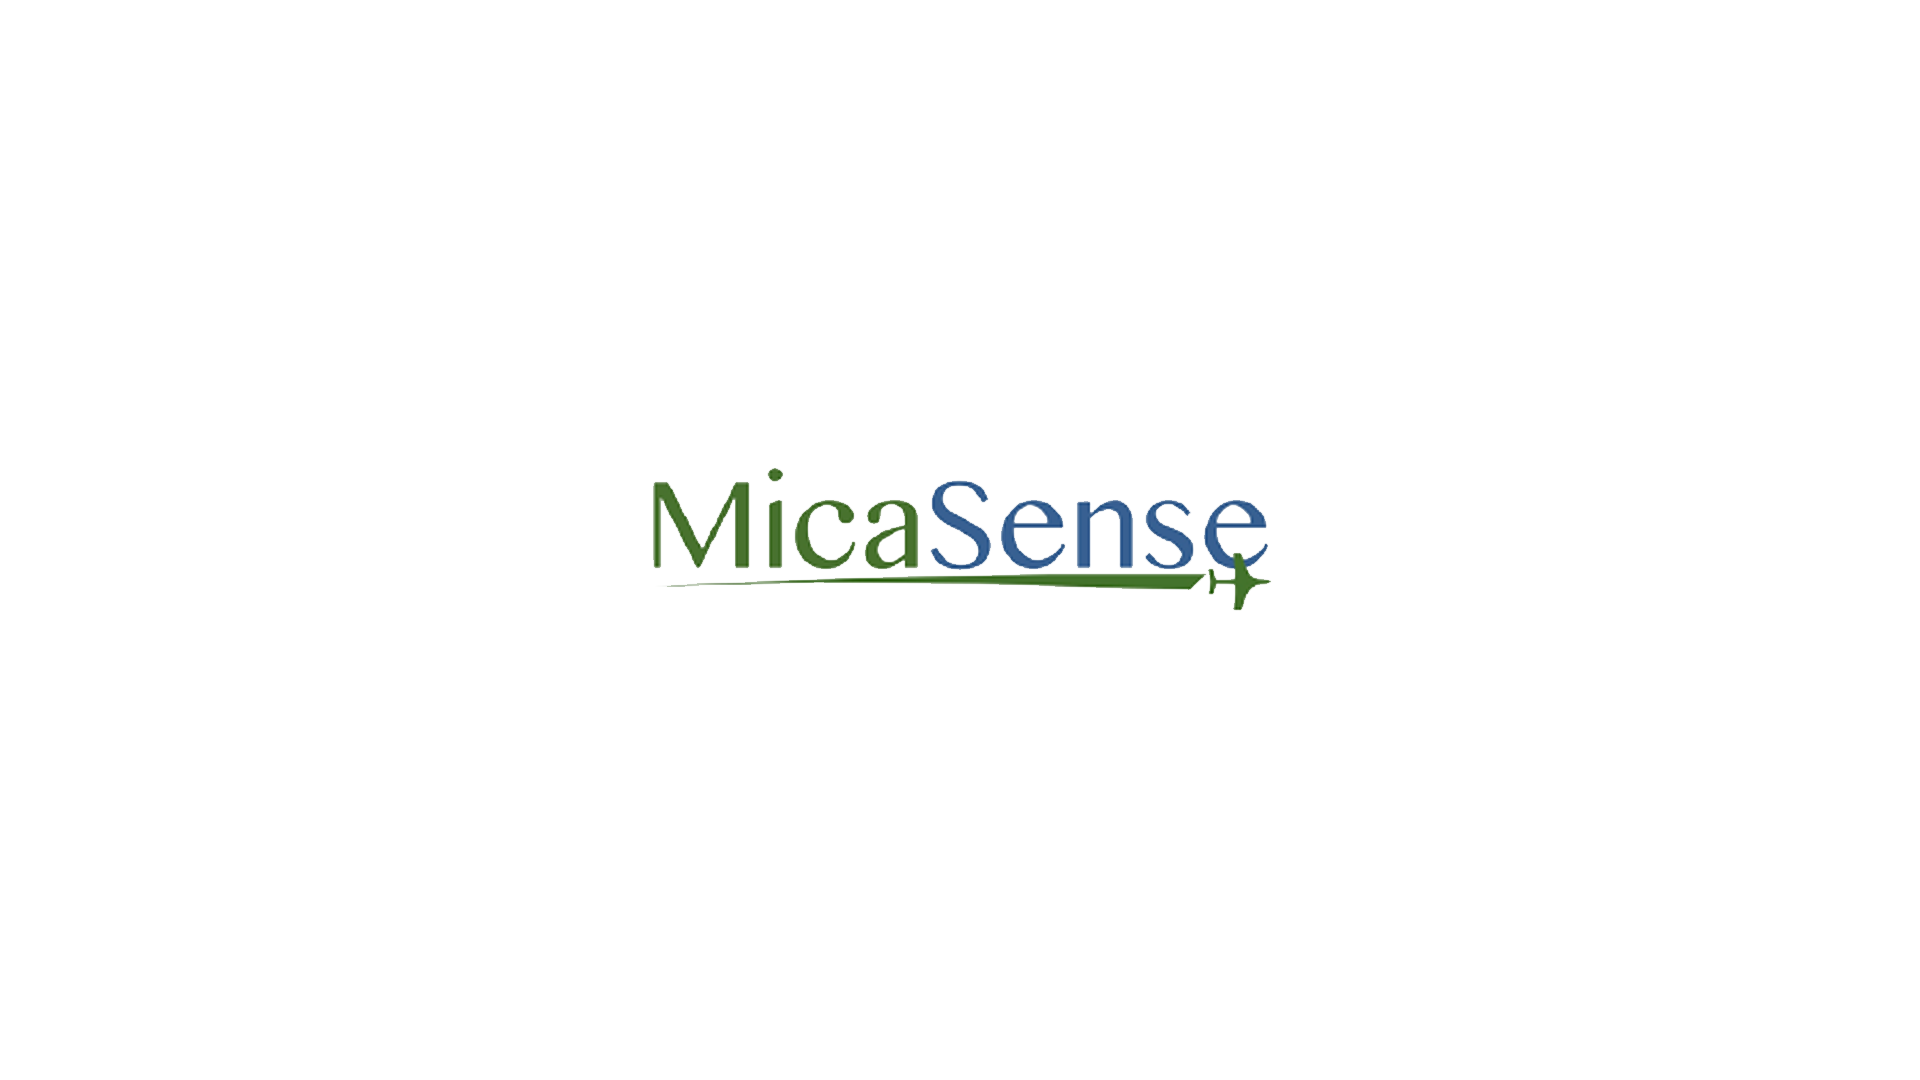 MicaSense, Inc.